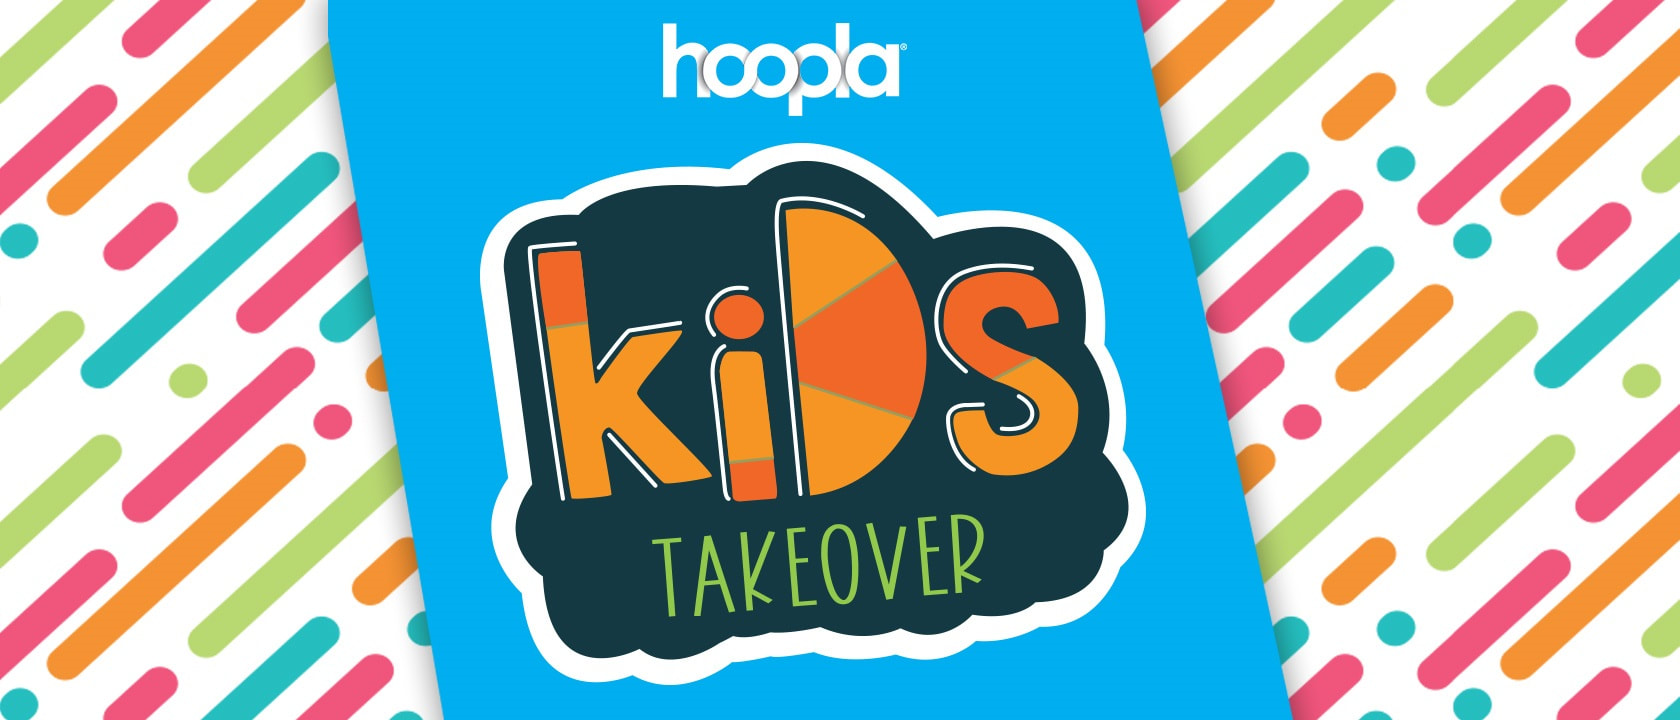 hoopla Kids Takeover logo